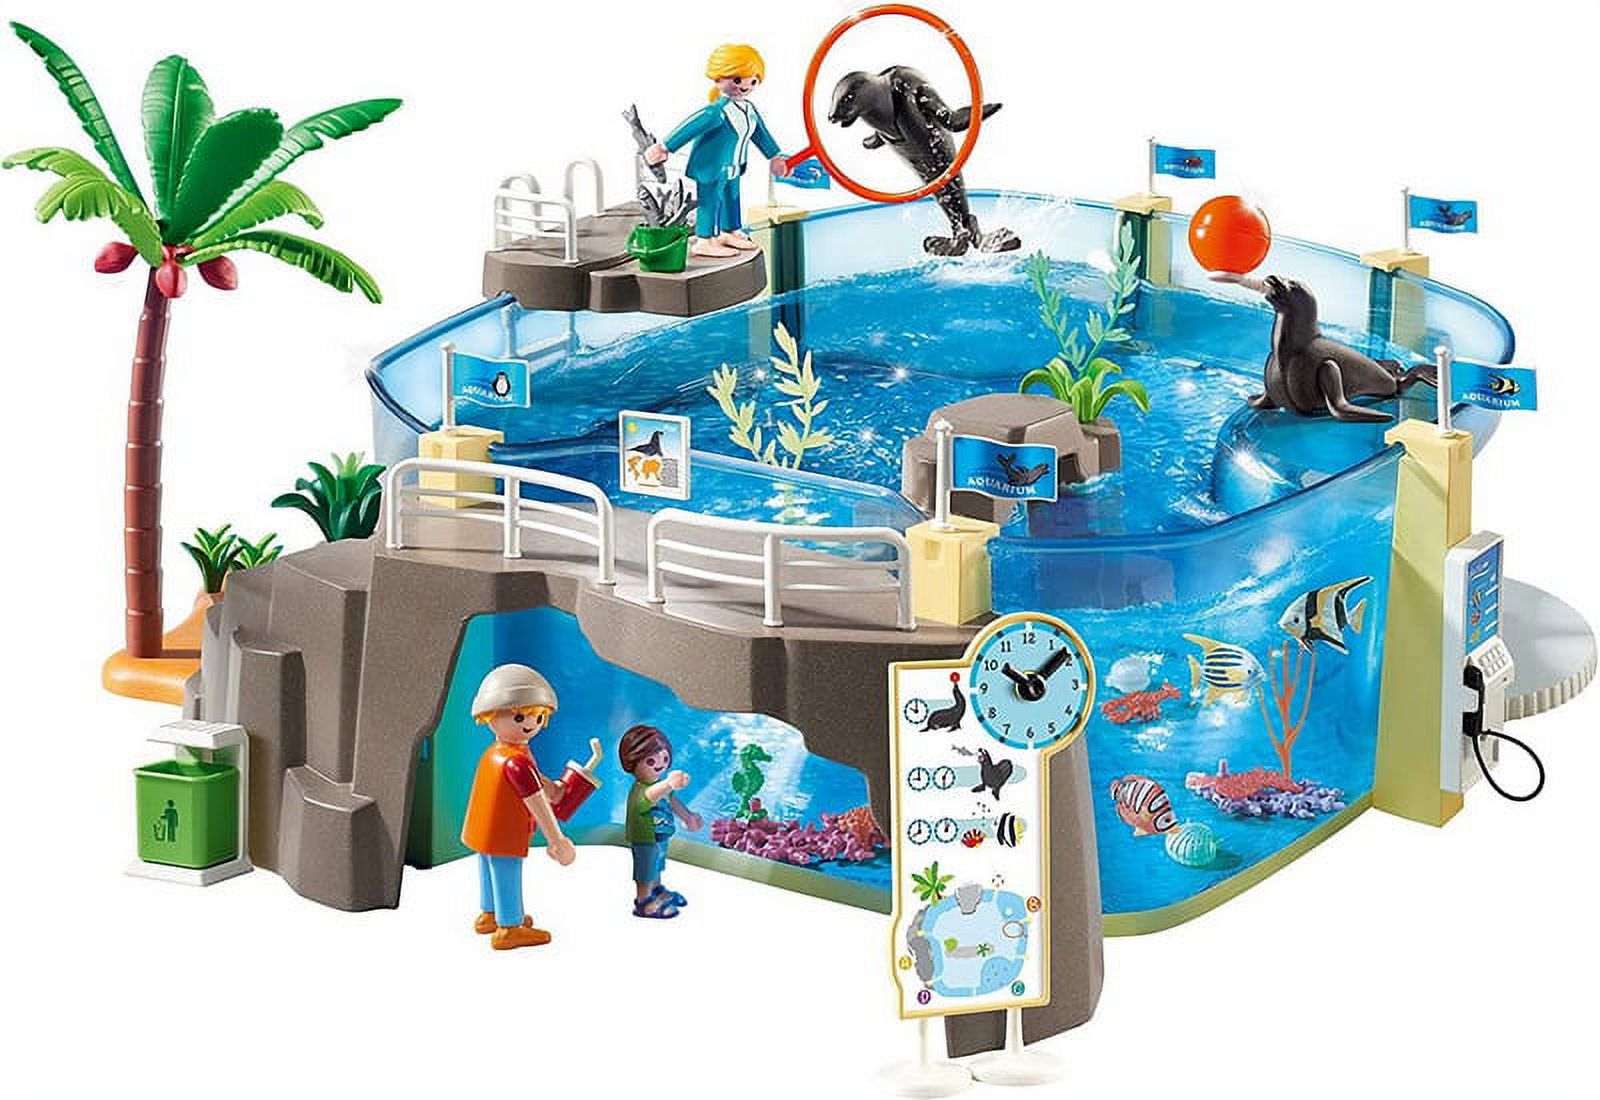 Playmobil 9060 Aquarium Building Set | 112 Pieces - image 2 of 4